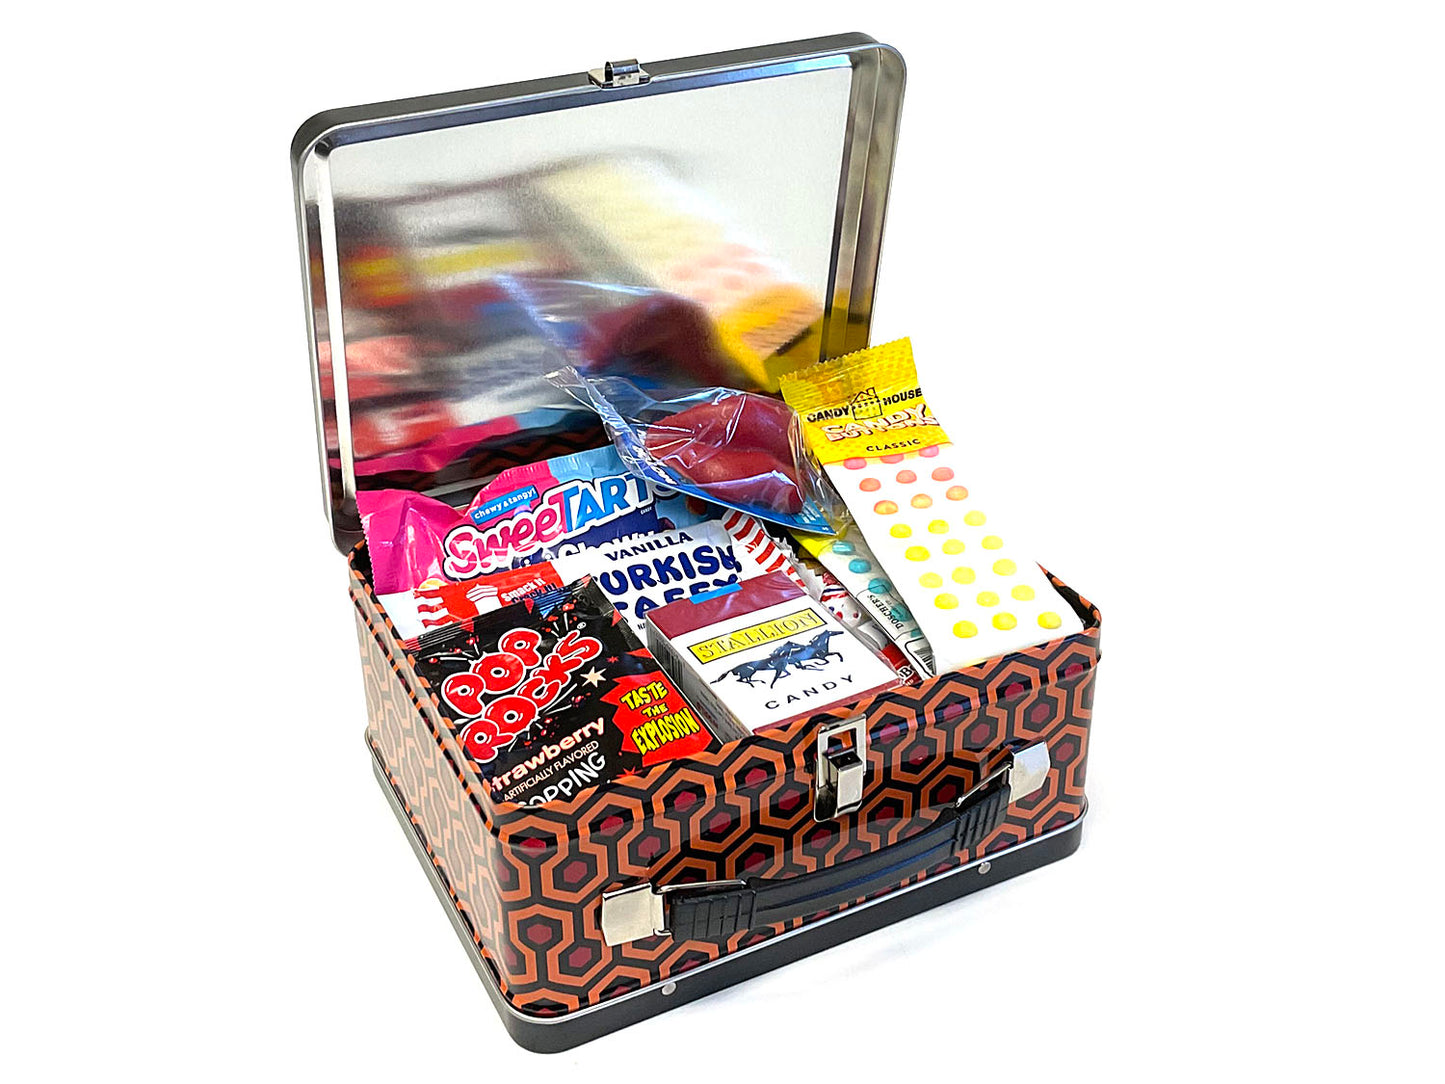 Dr Sleep / Redrun lunch box premium assortment